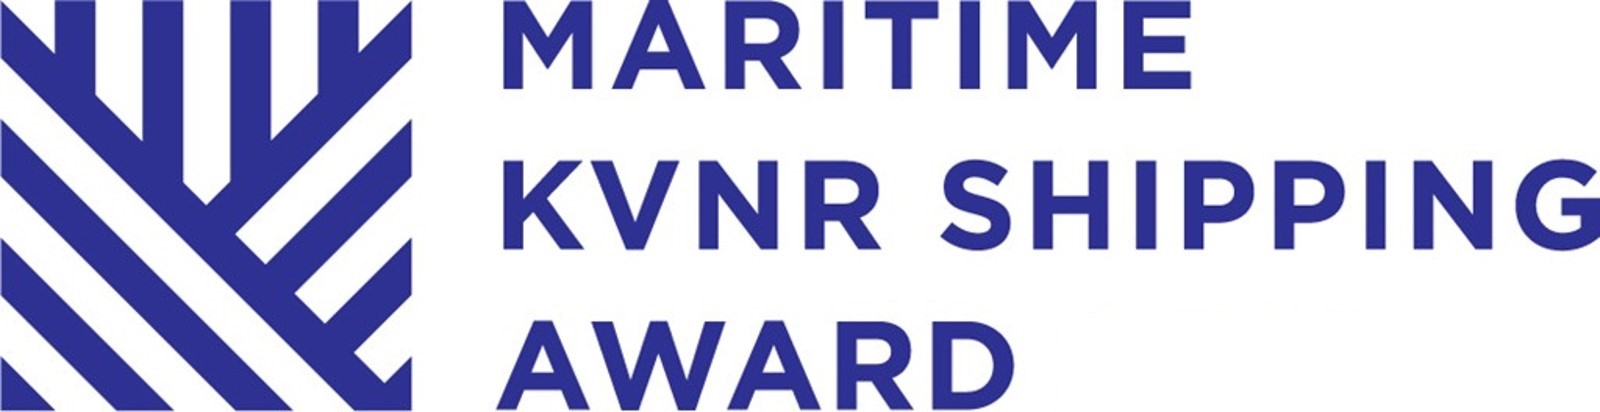 Maritime KVNR Shipping Award logo